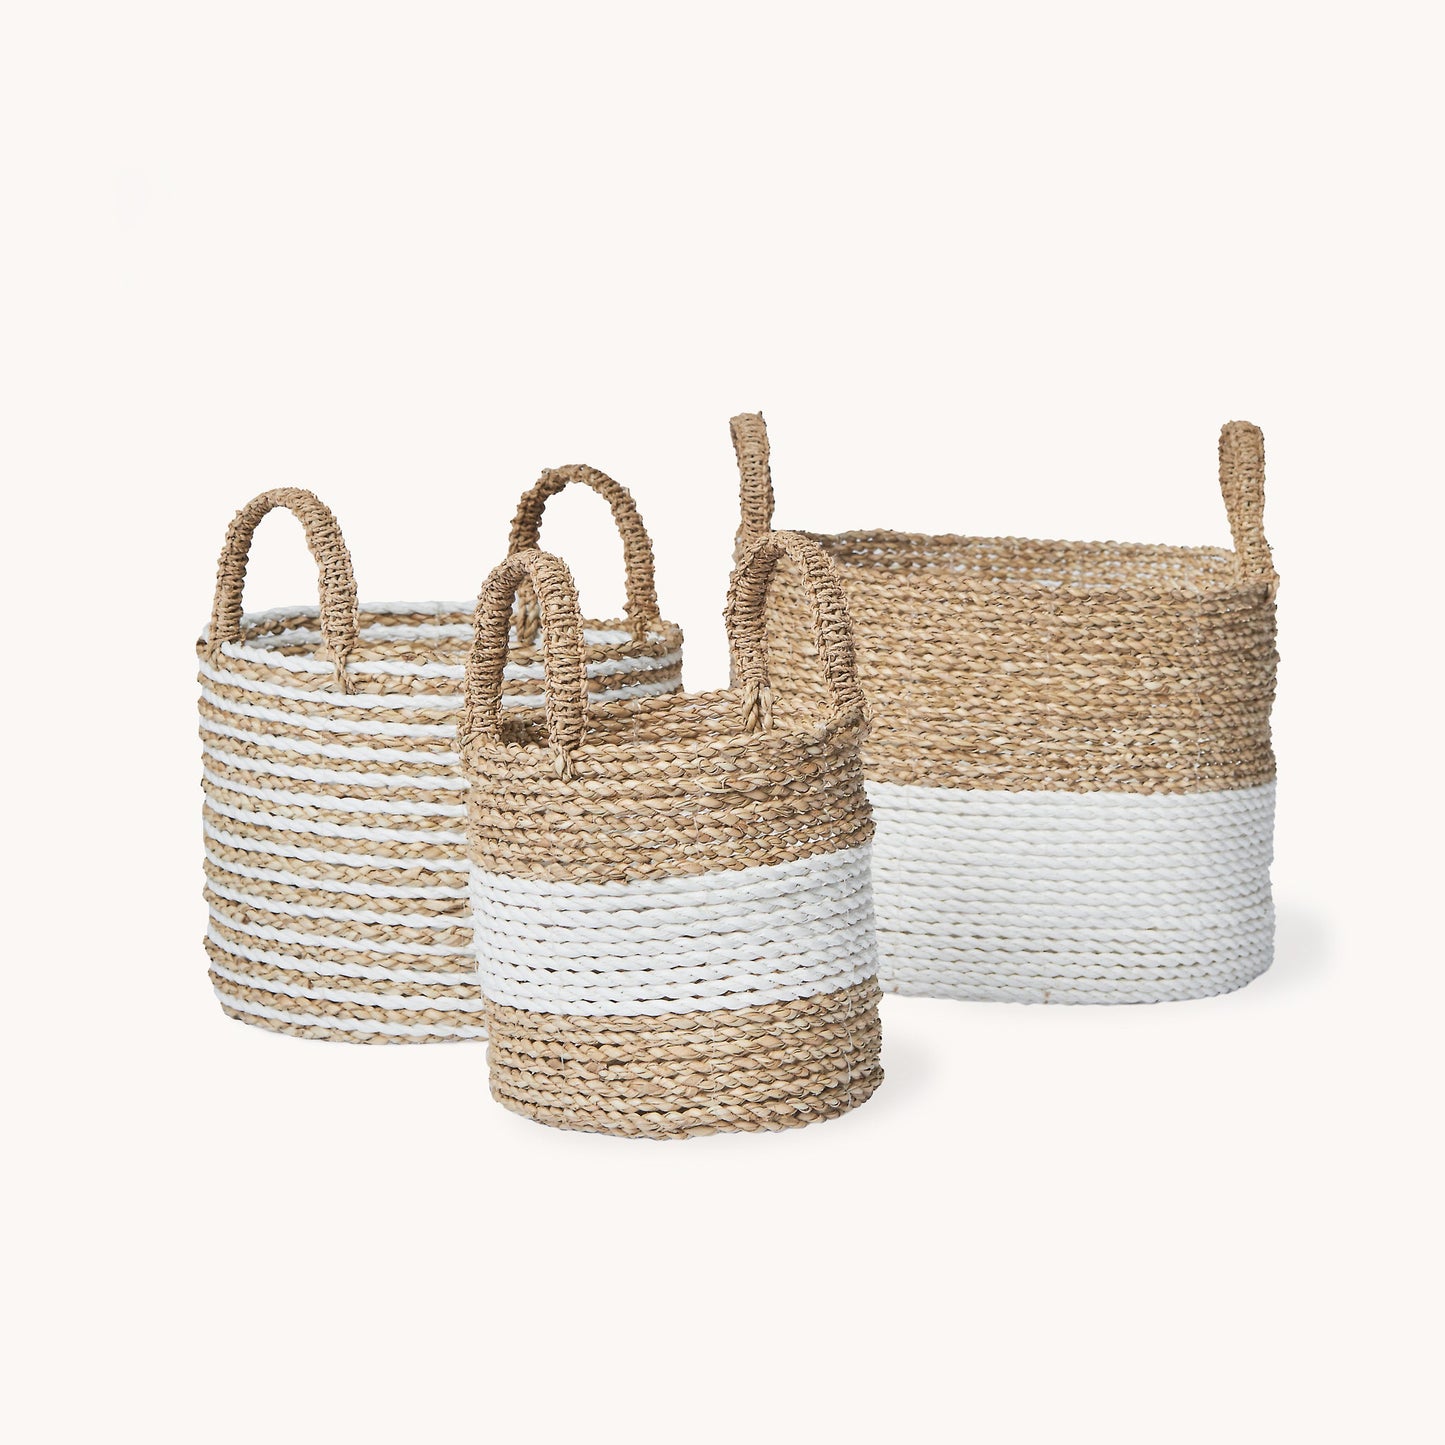 Handled Basket - 3 Sizes - White/Natural